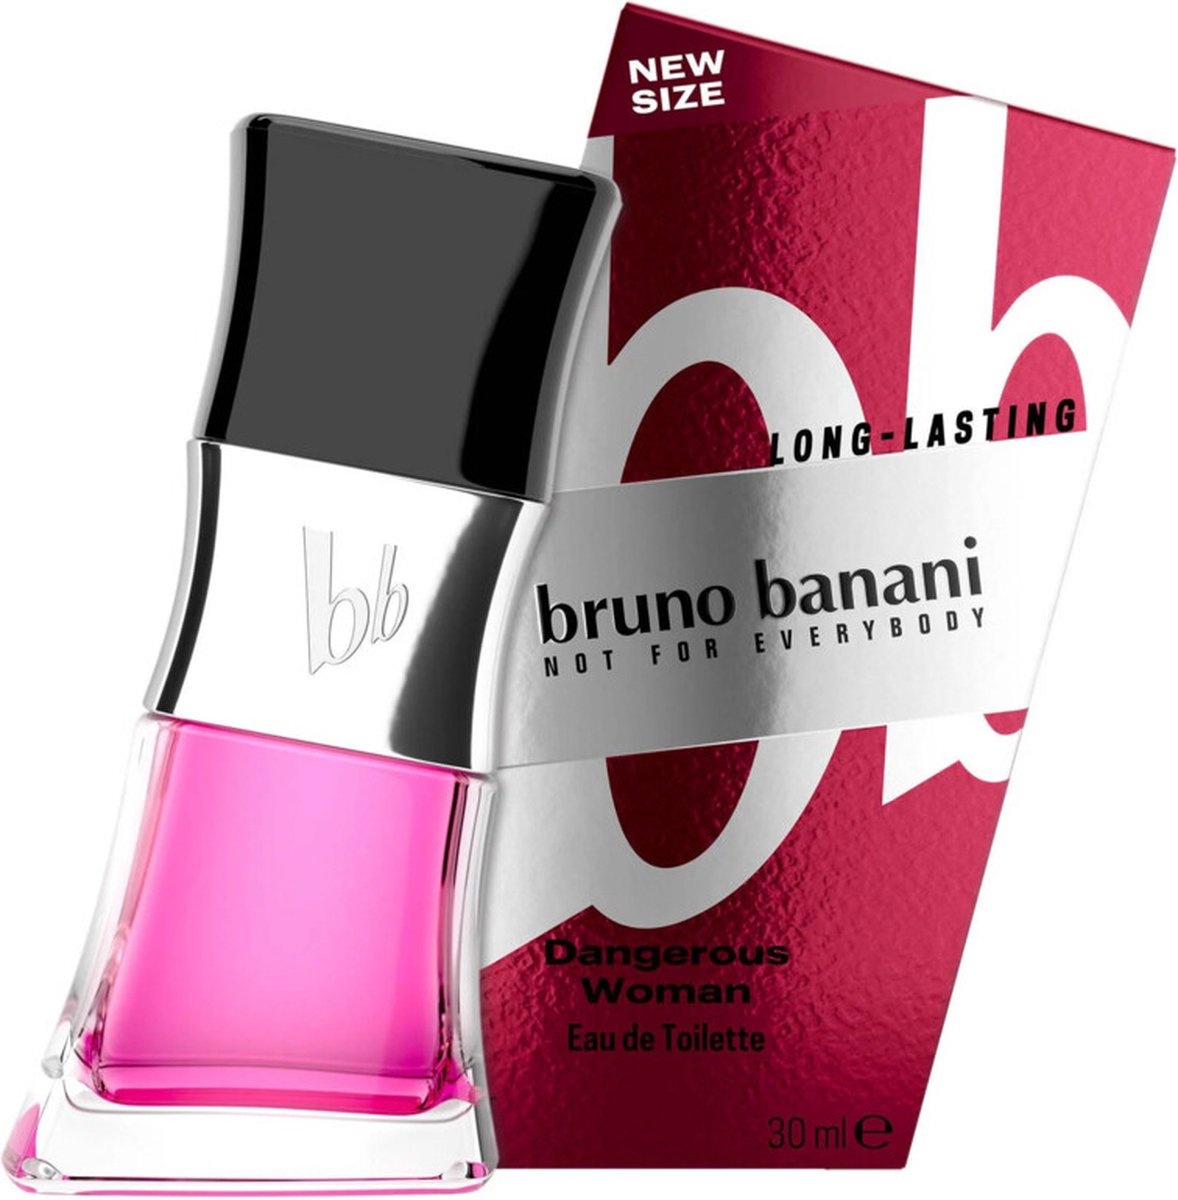 Bruno Banani – Dangerous Woman Eau de Toilette – 30 ml – Verpackung beschädigt